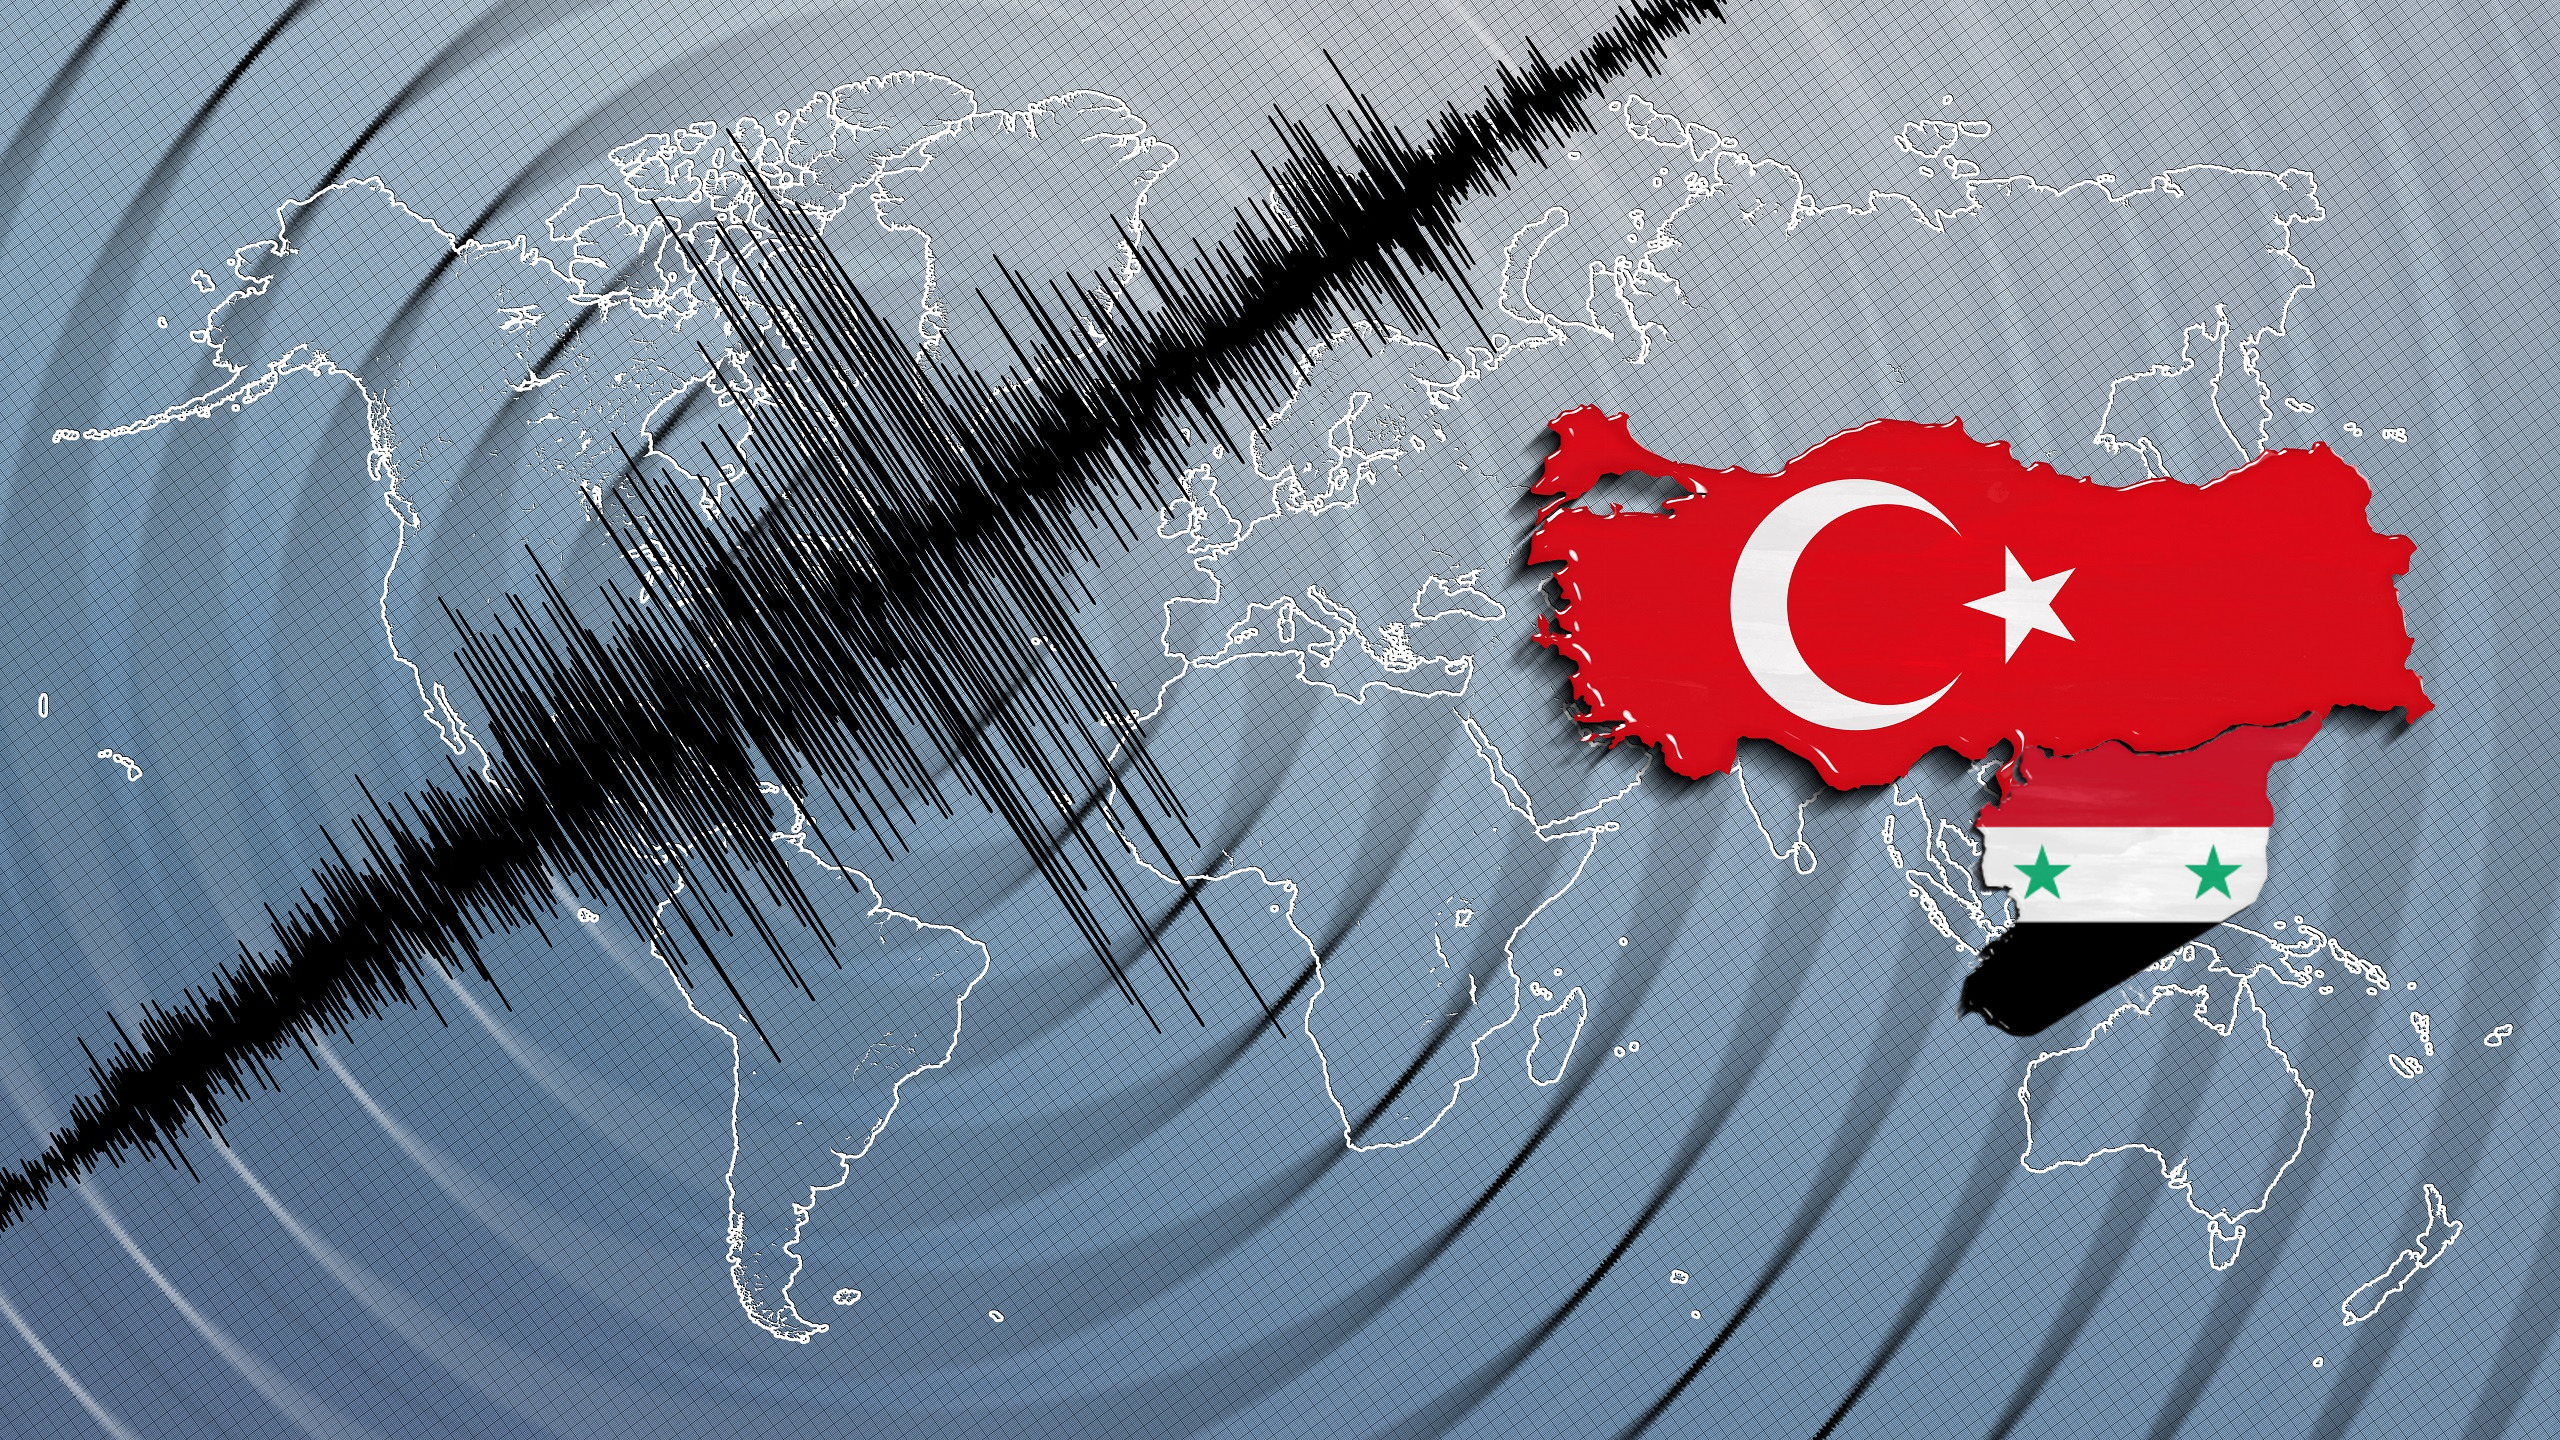 Massive 7.8 Magnitude Earthquake Claims Over 500 Lives in Turkey, Syria